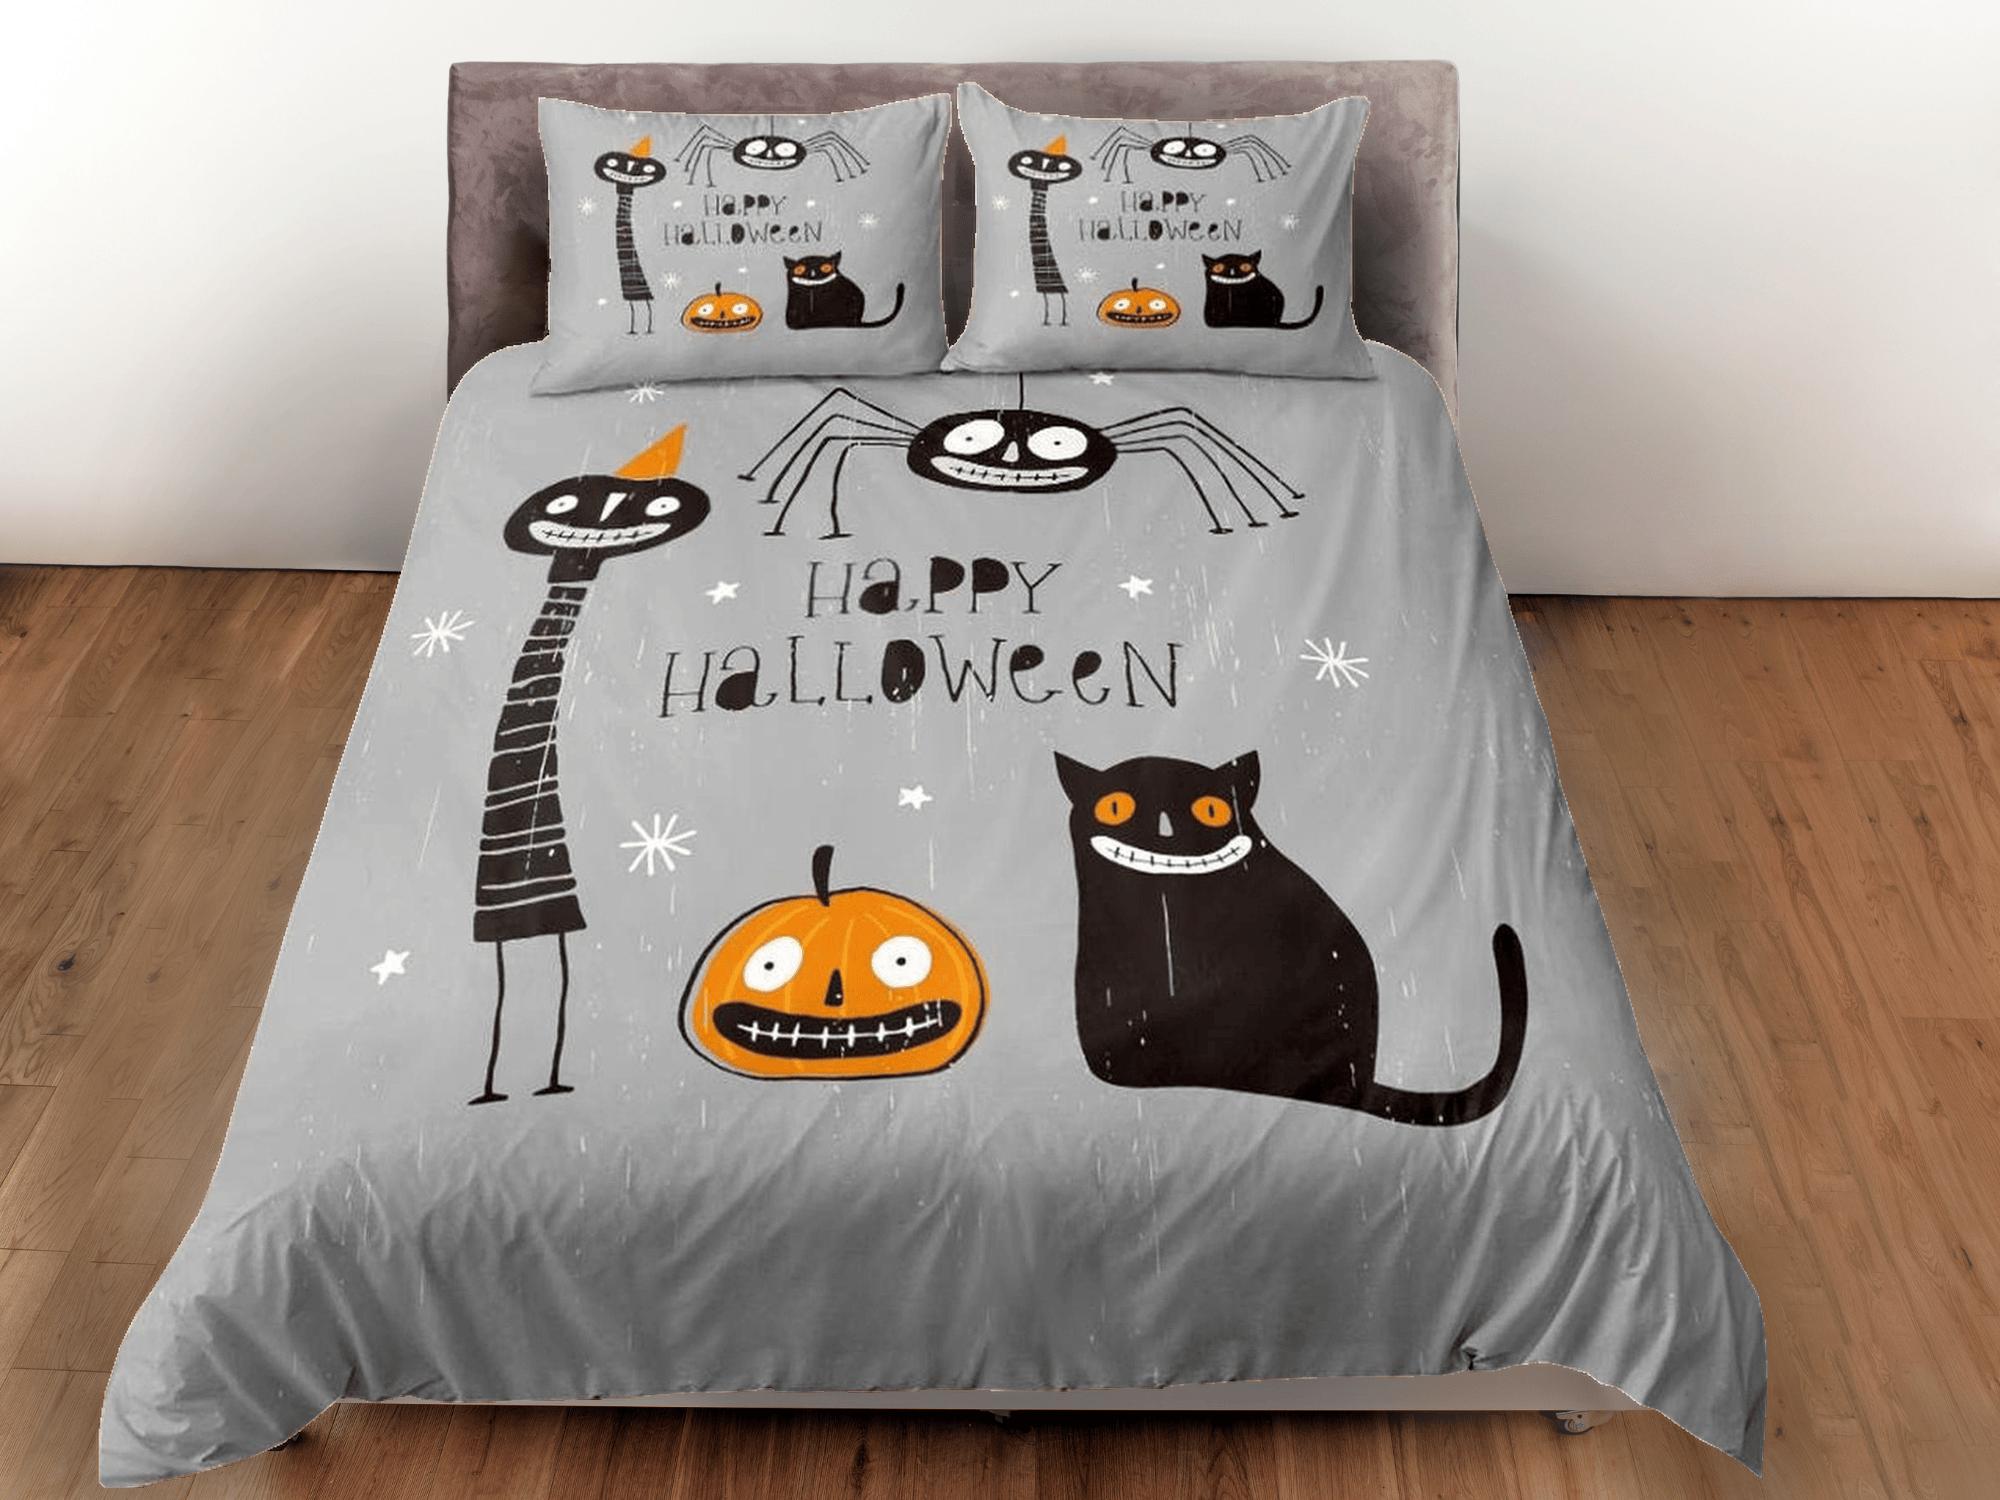 daintyduvet Smiling pumpkin black cat spider halloween bedding & pillowcase, grey duvet cover set dorm bedding, nursery toddler bedding, halloween gift